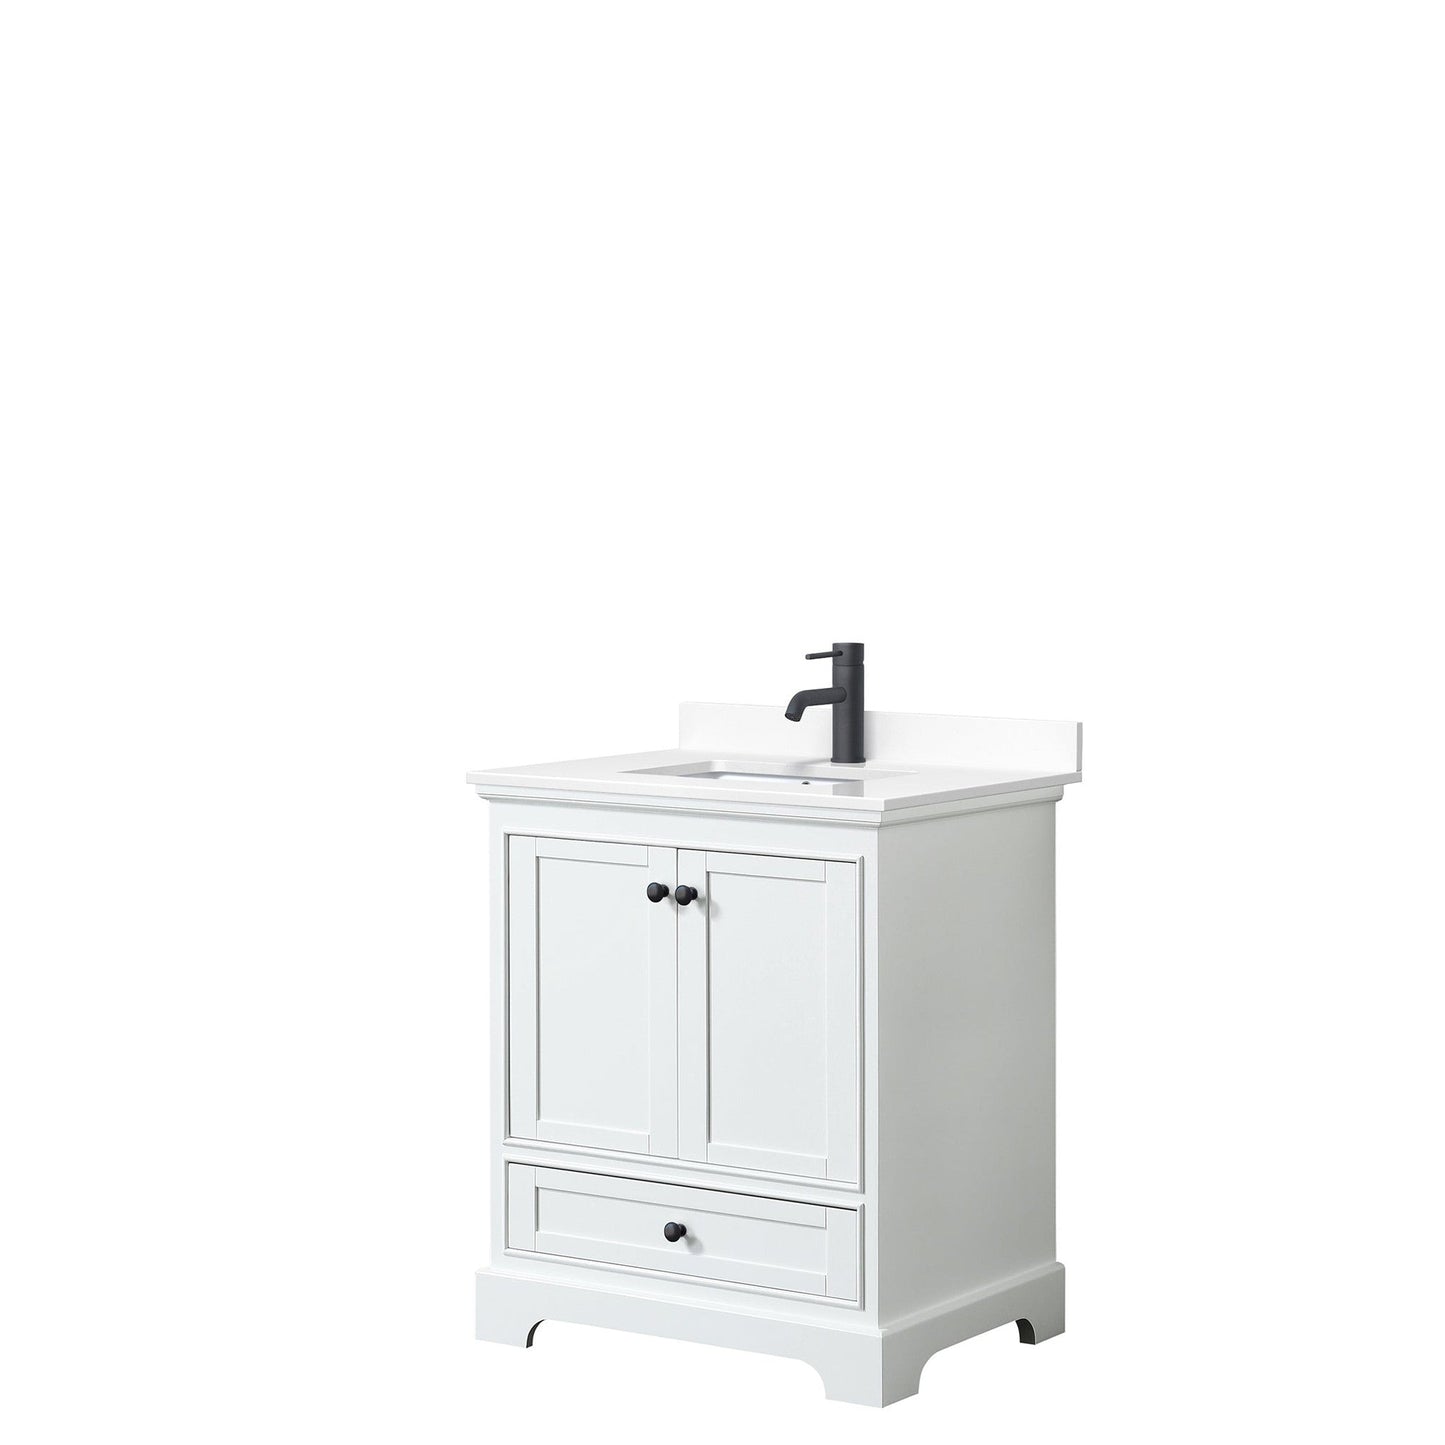 Deborah 30" Single Bathroom Vanity in White, White Cultured Marble Countertop, Undermount Square Sink, Matte Black Trim